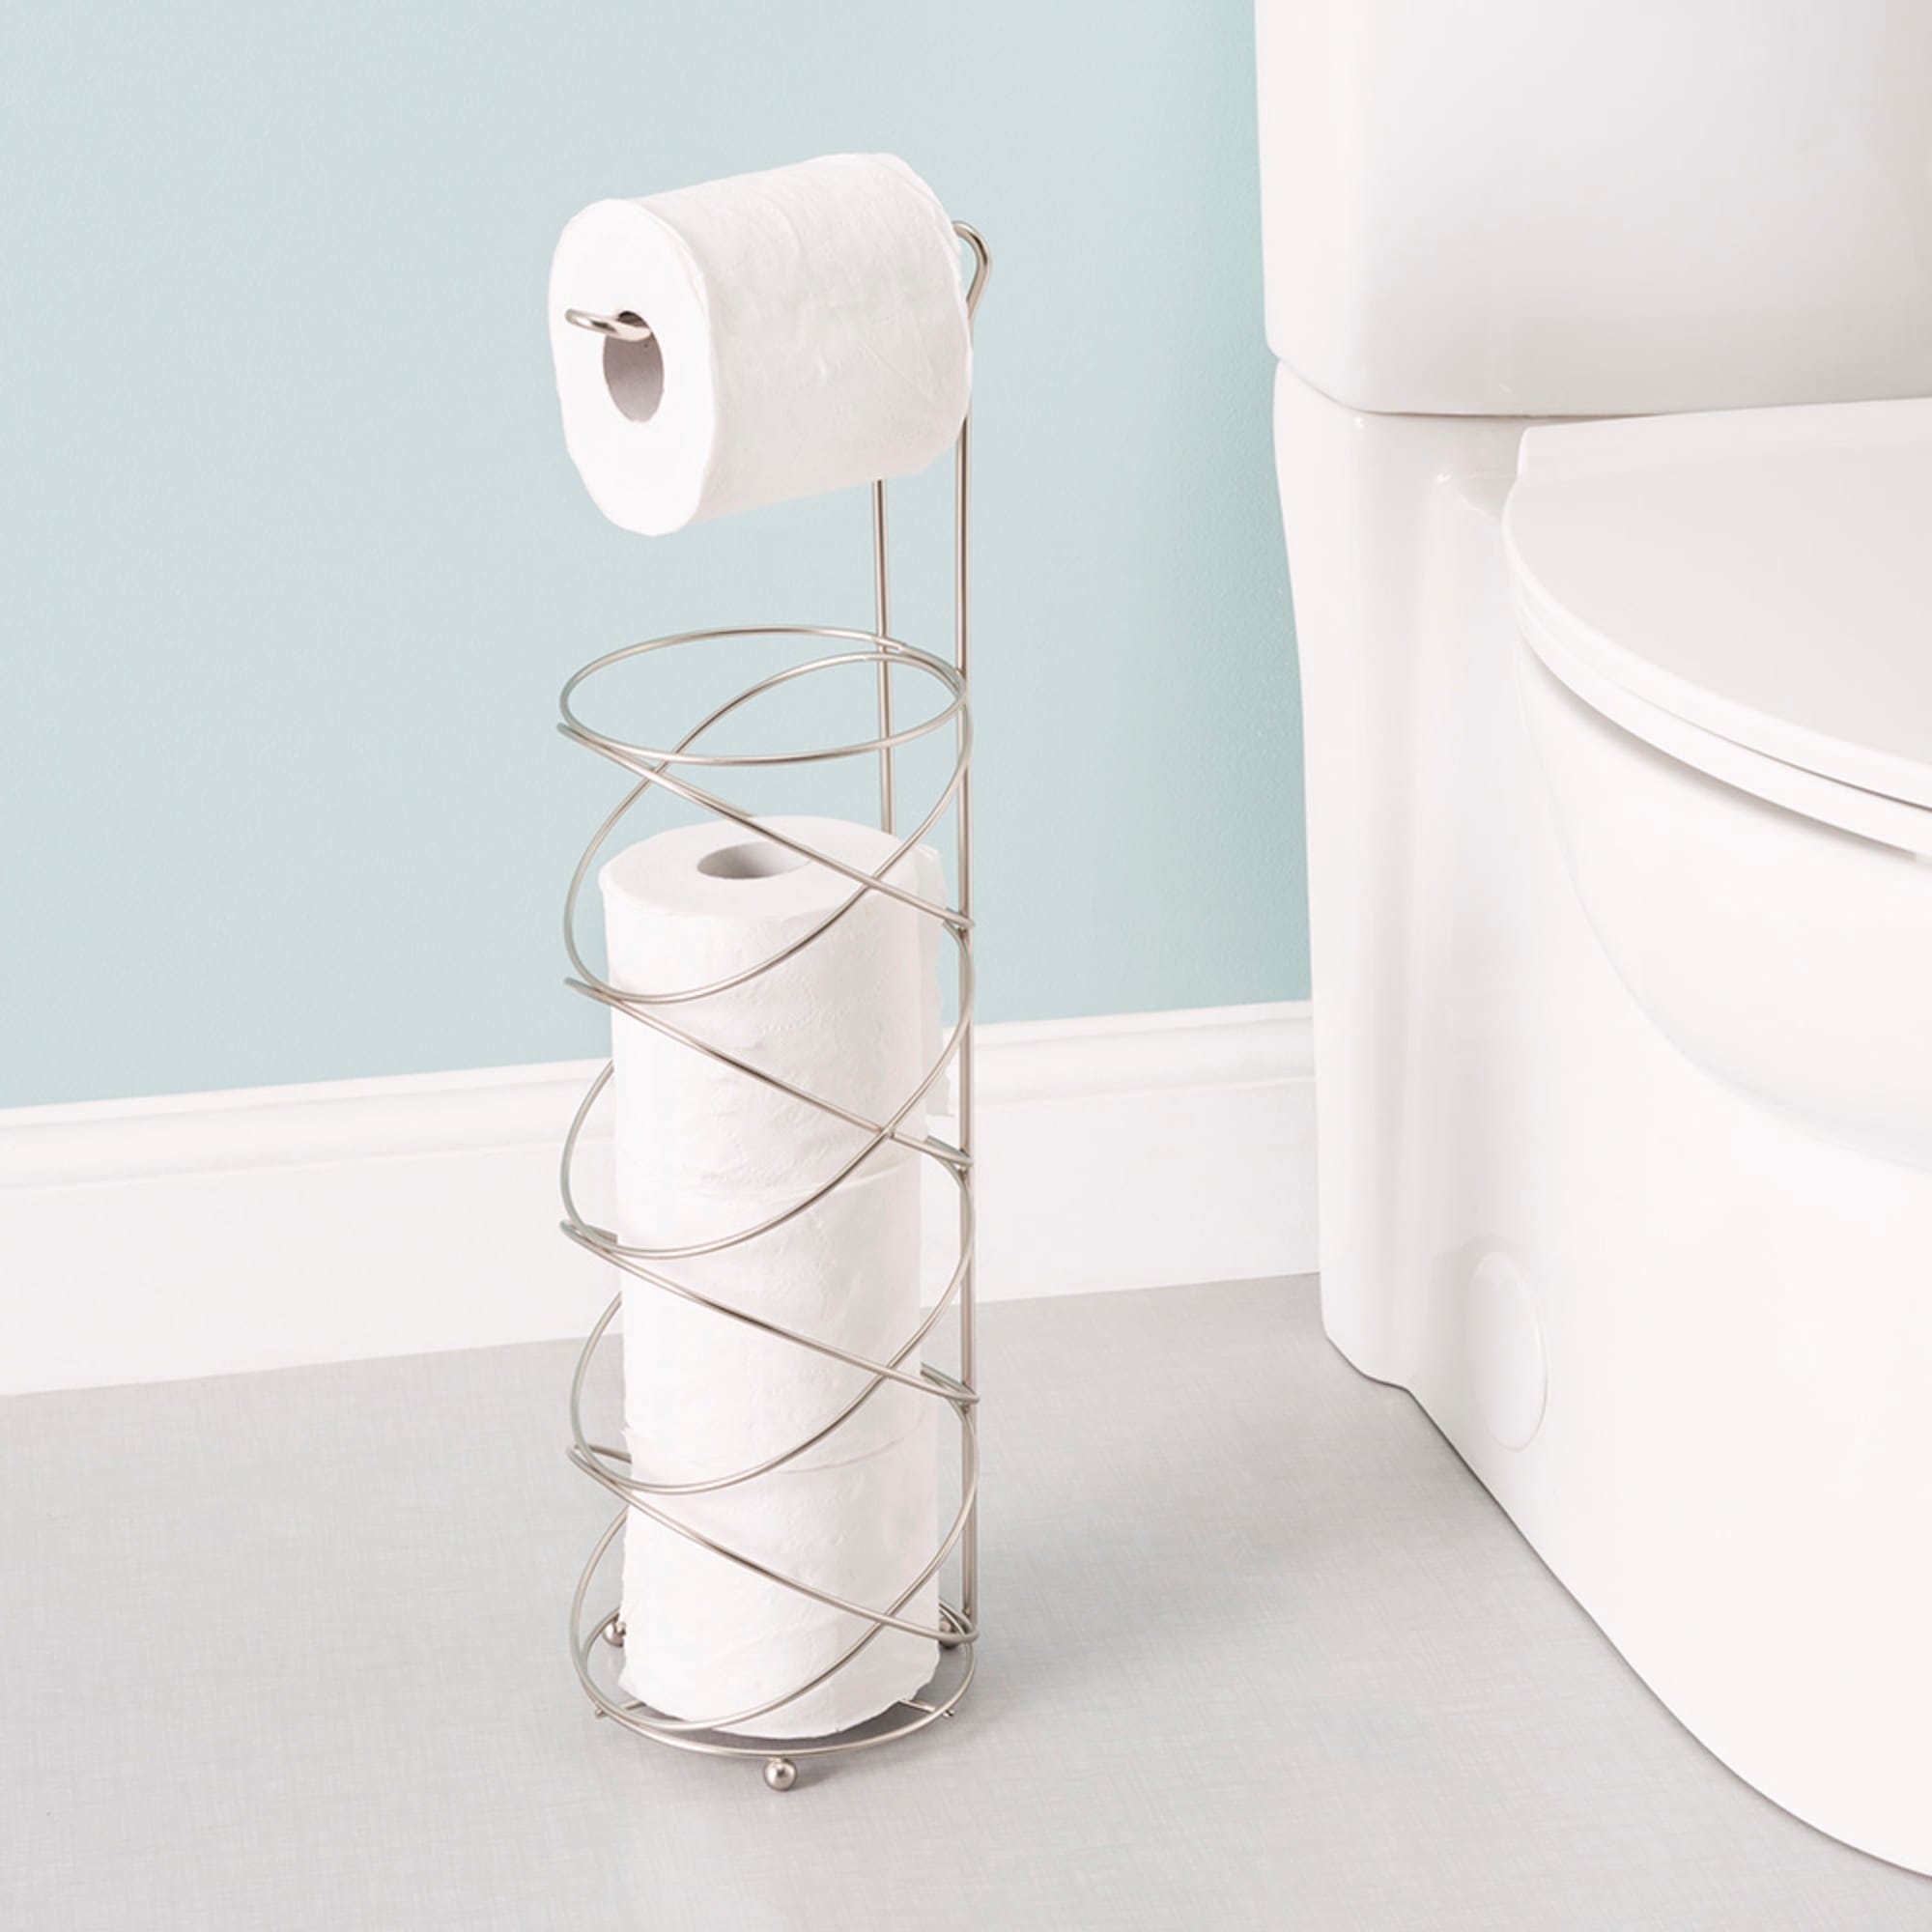 Better Homes & Gardens Free-Standing Toilet Paper Roll Holder, Satin Nickel  Finish